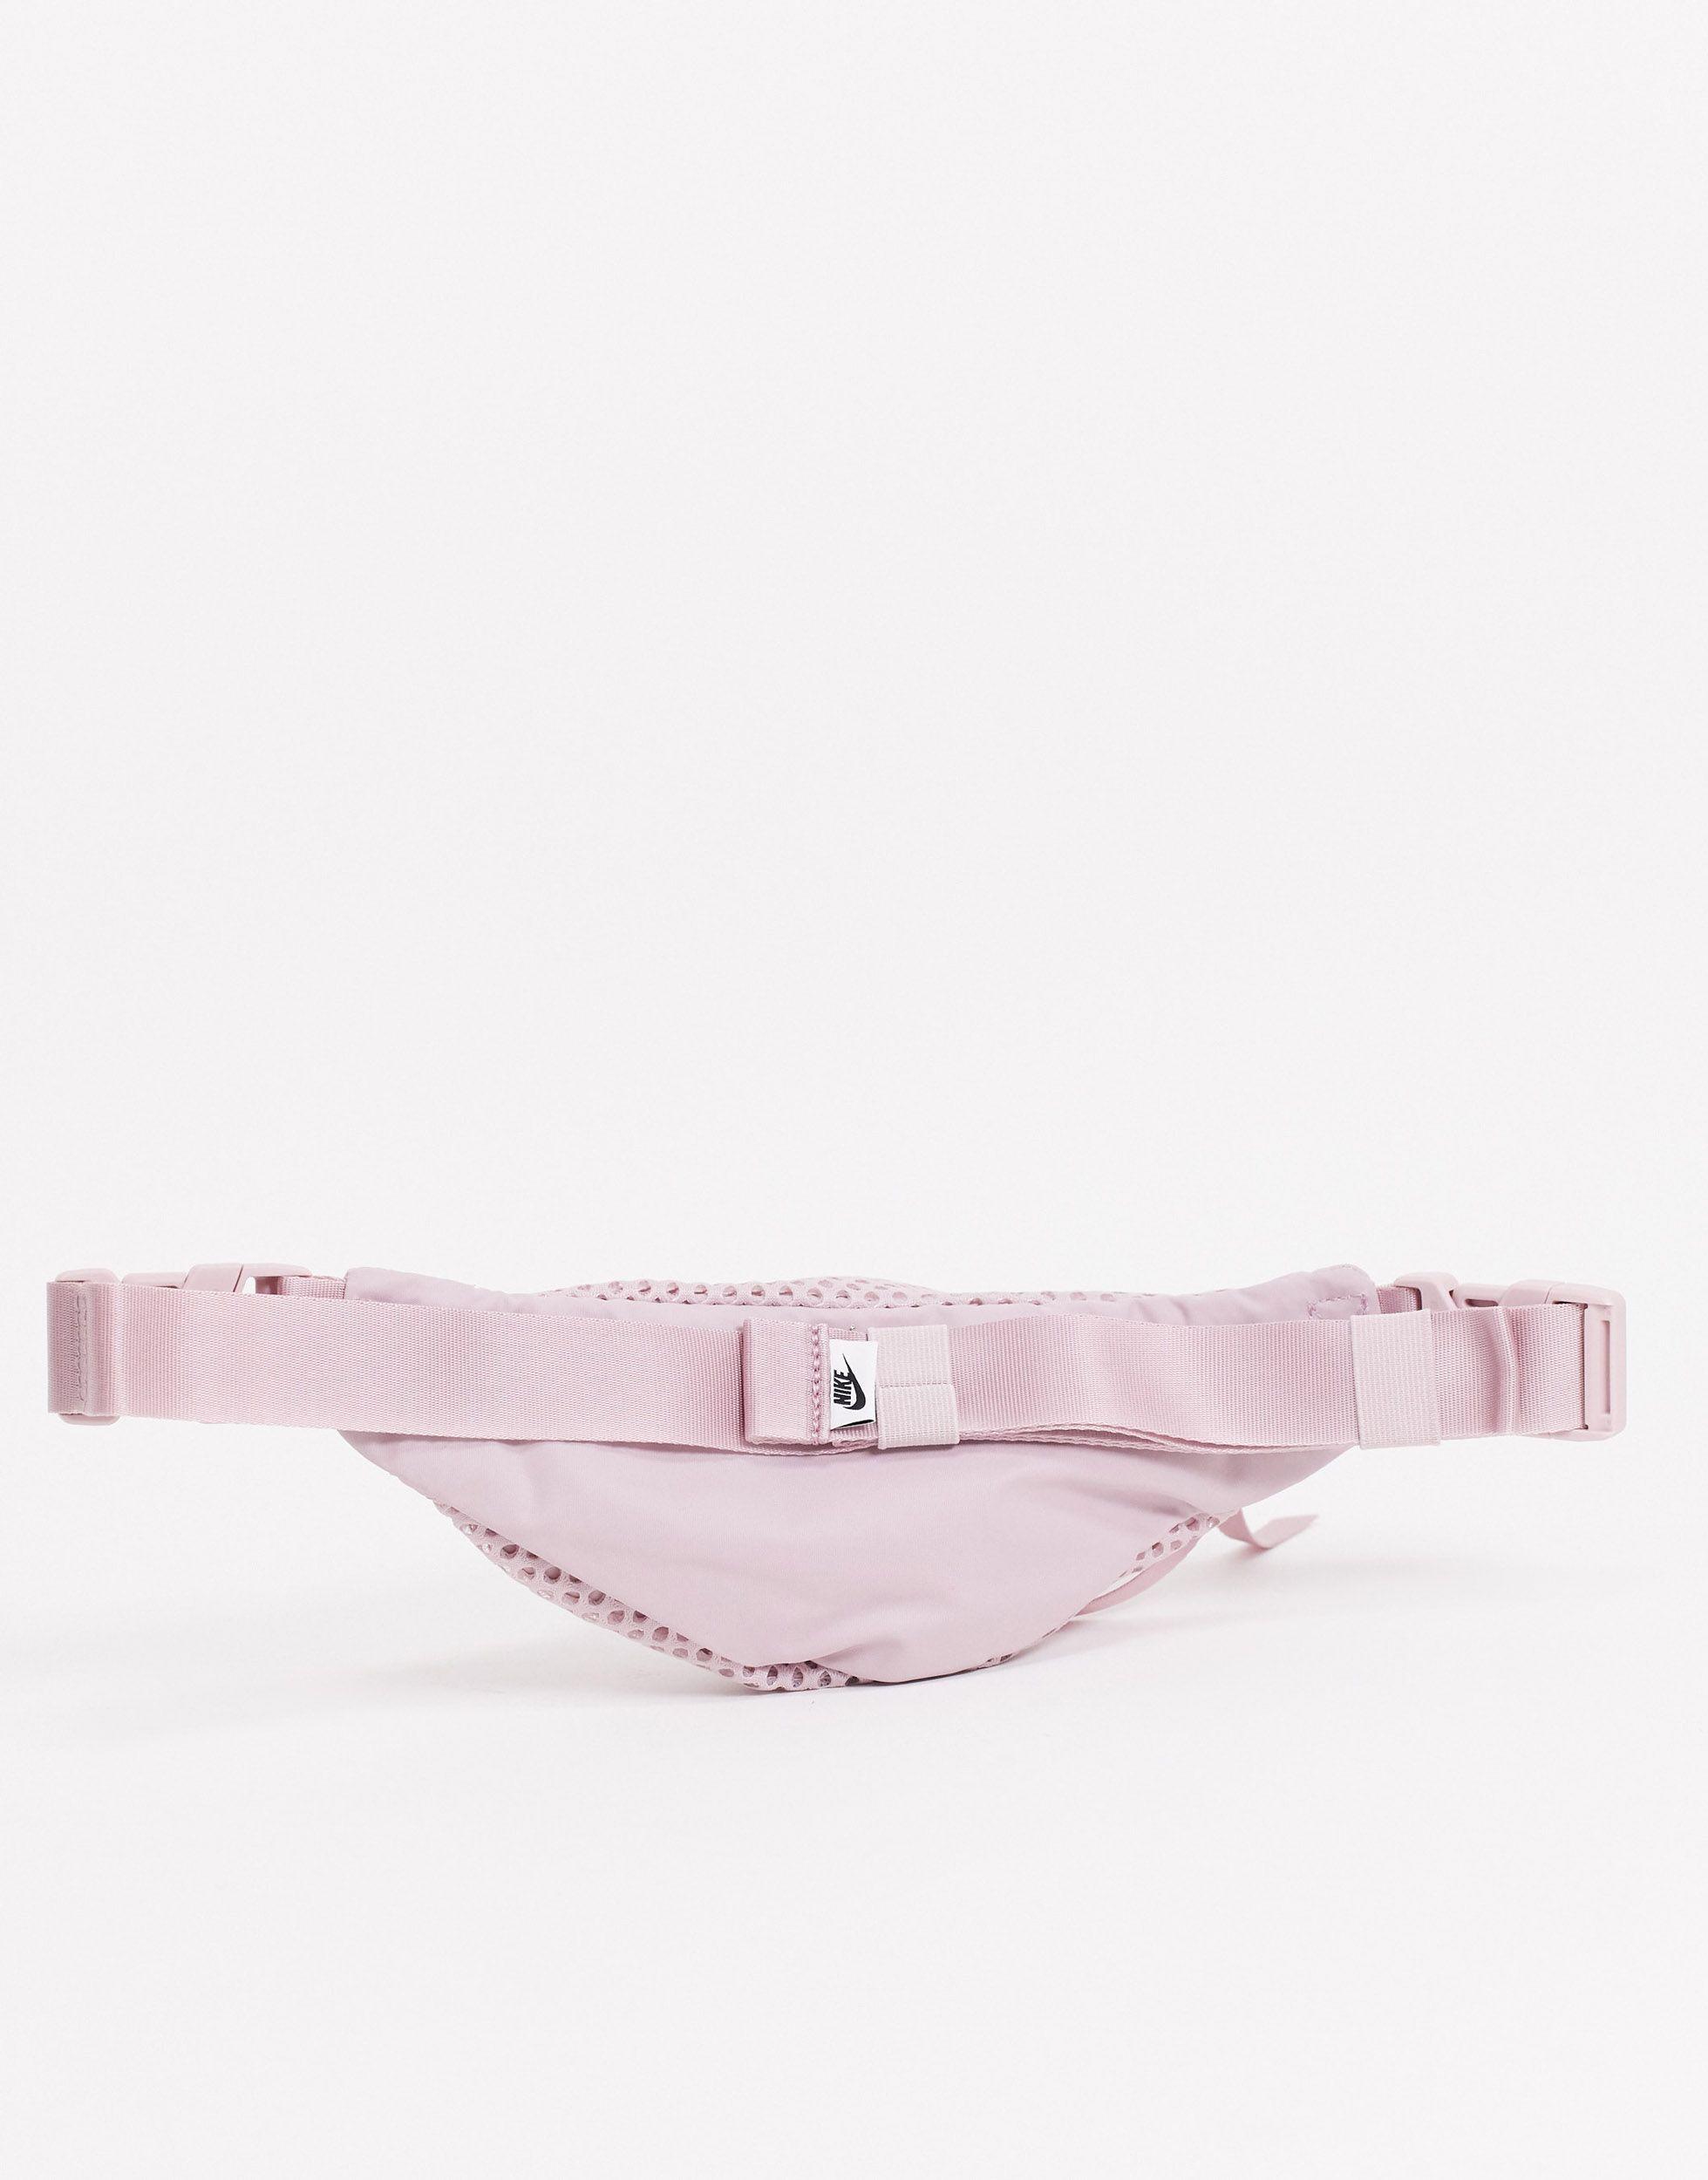 Nike Pink Mesh Bum Bag | Lyst